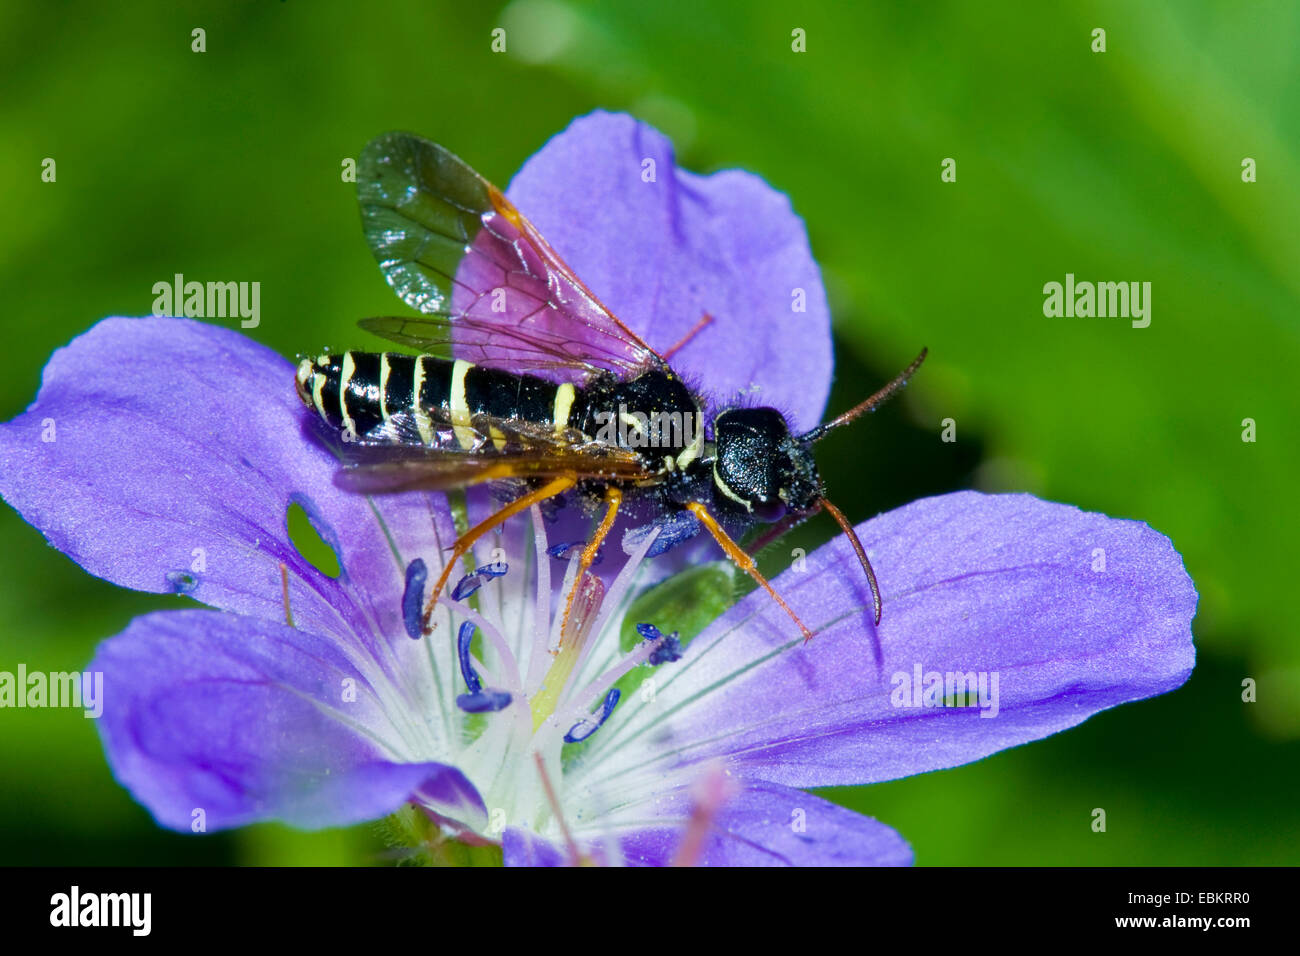 Sawfly (Megalodontes spec.), seduta su un fiore violaceo, Germania Foto Stock